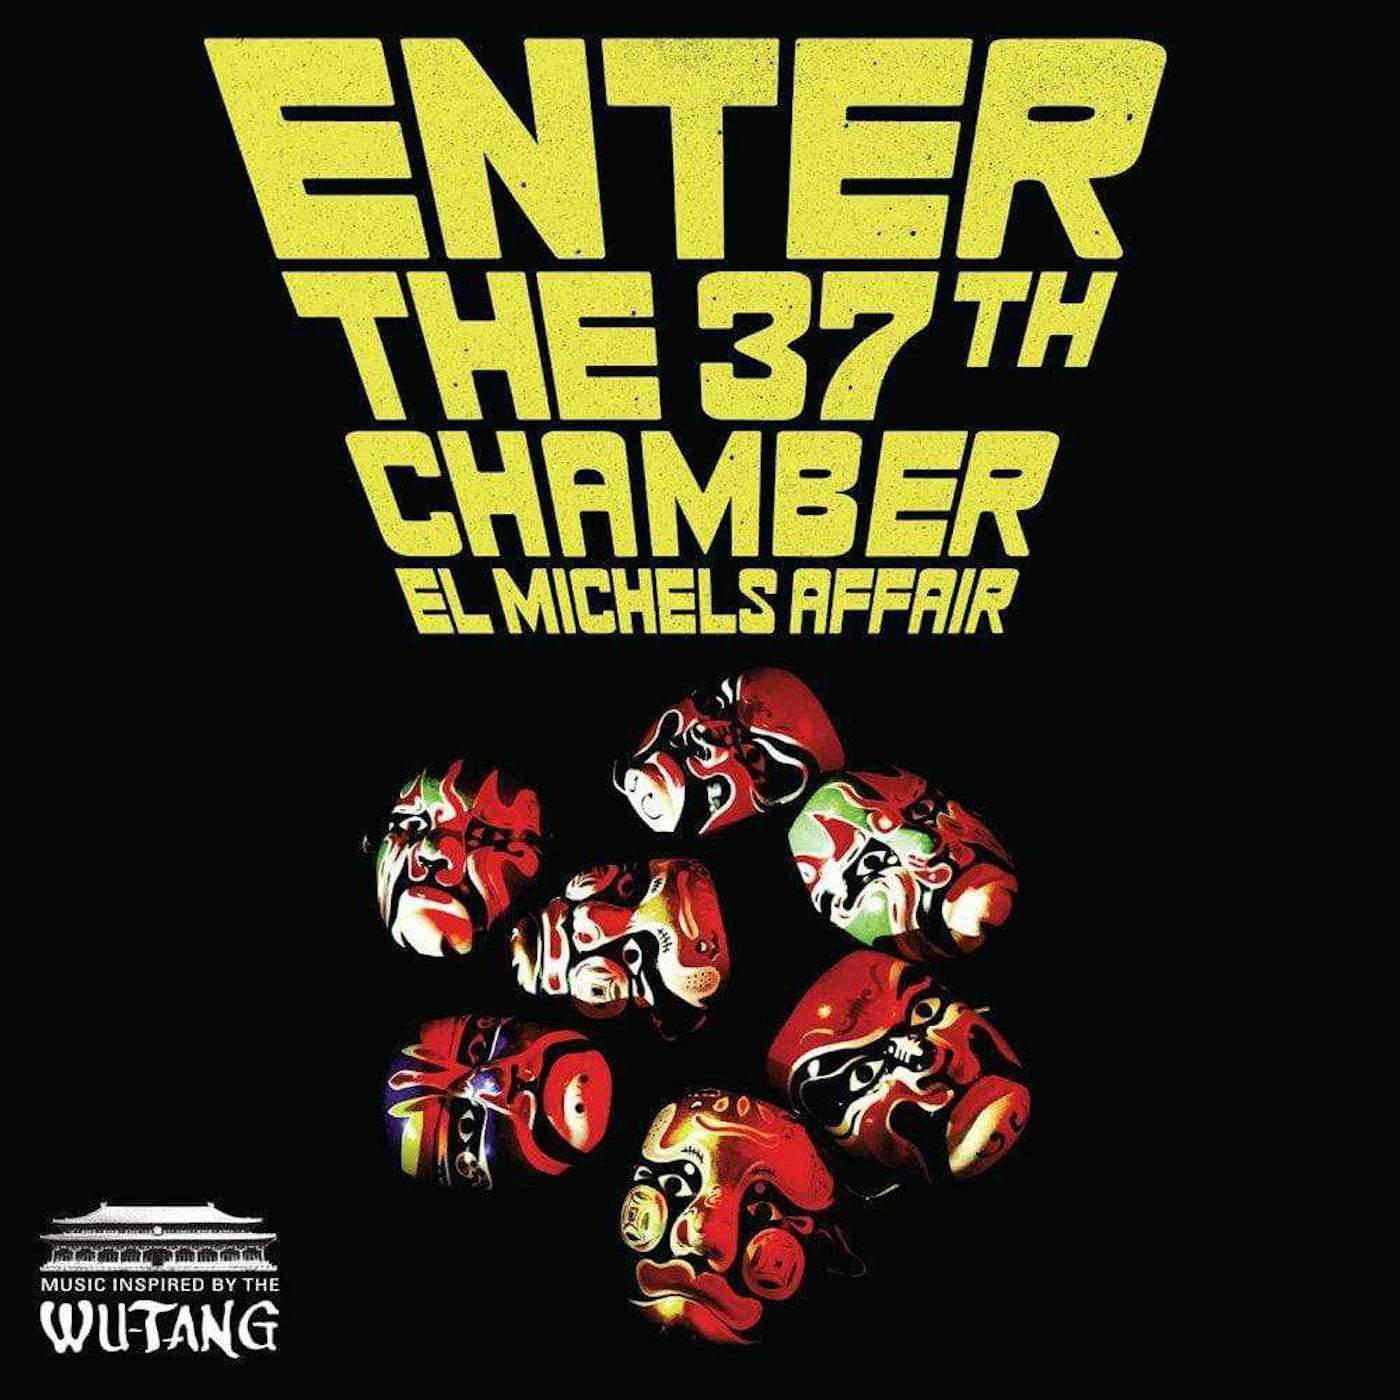 El Michels Affair Enter The 37th Chamber (Translucent Gold) Vinyl Record